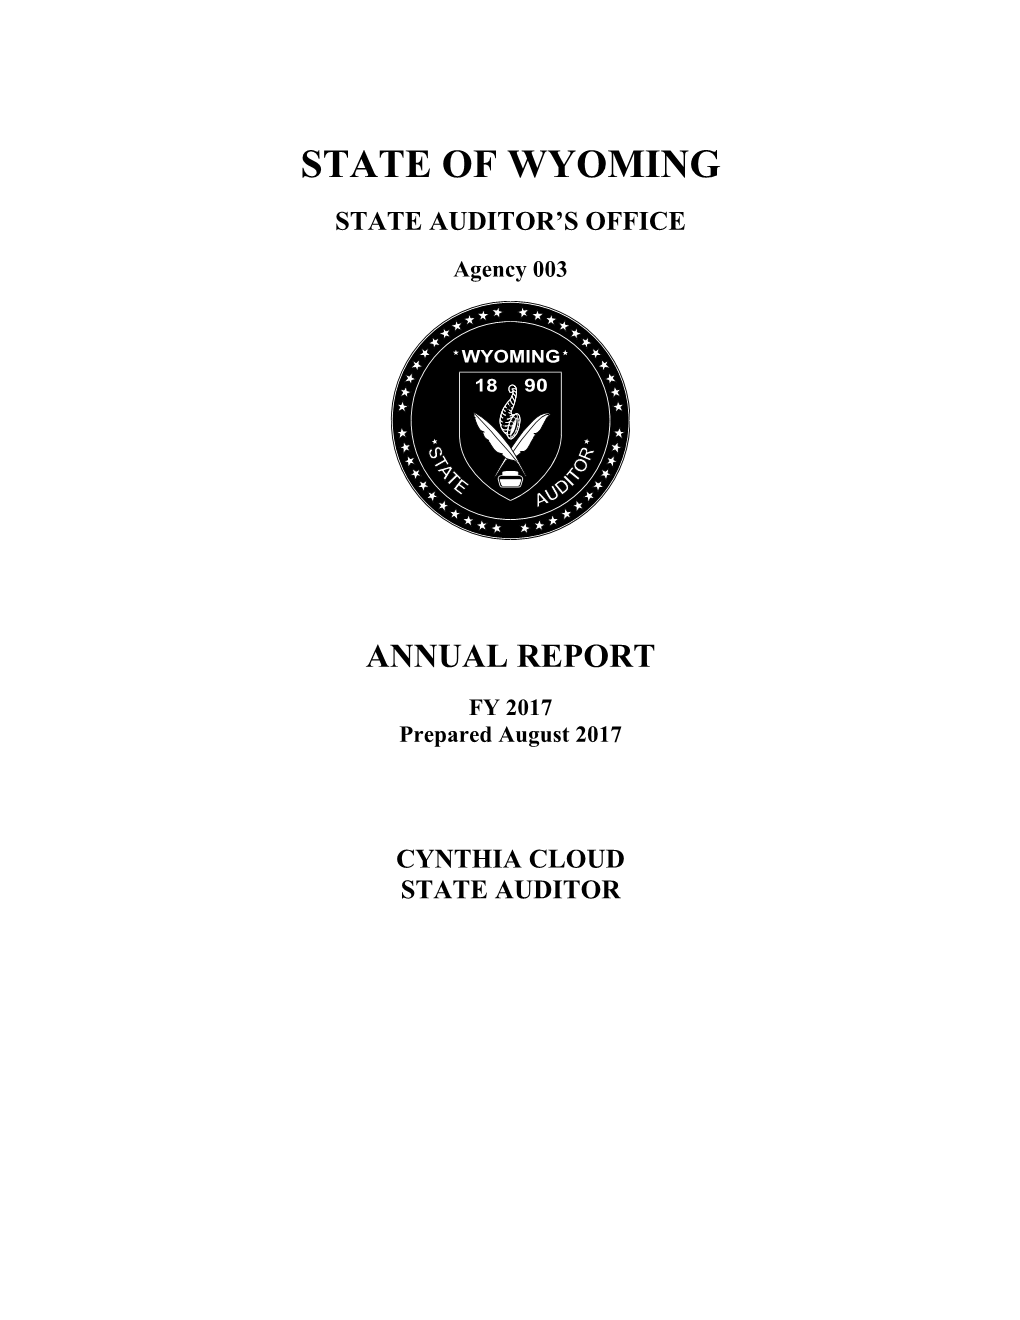 State of Wyoming